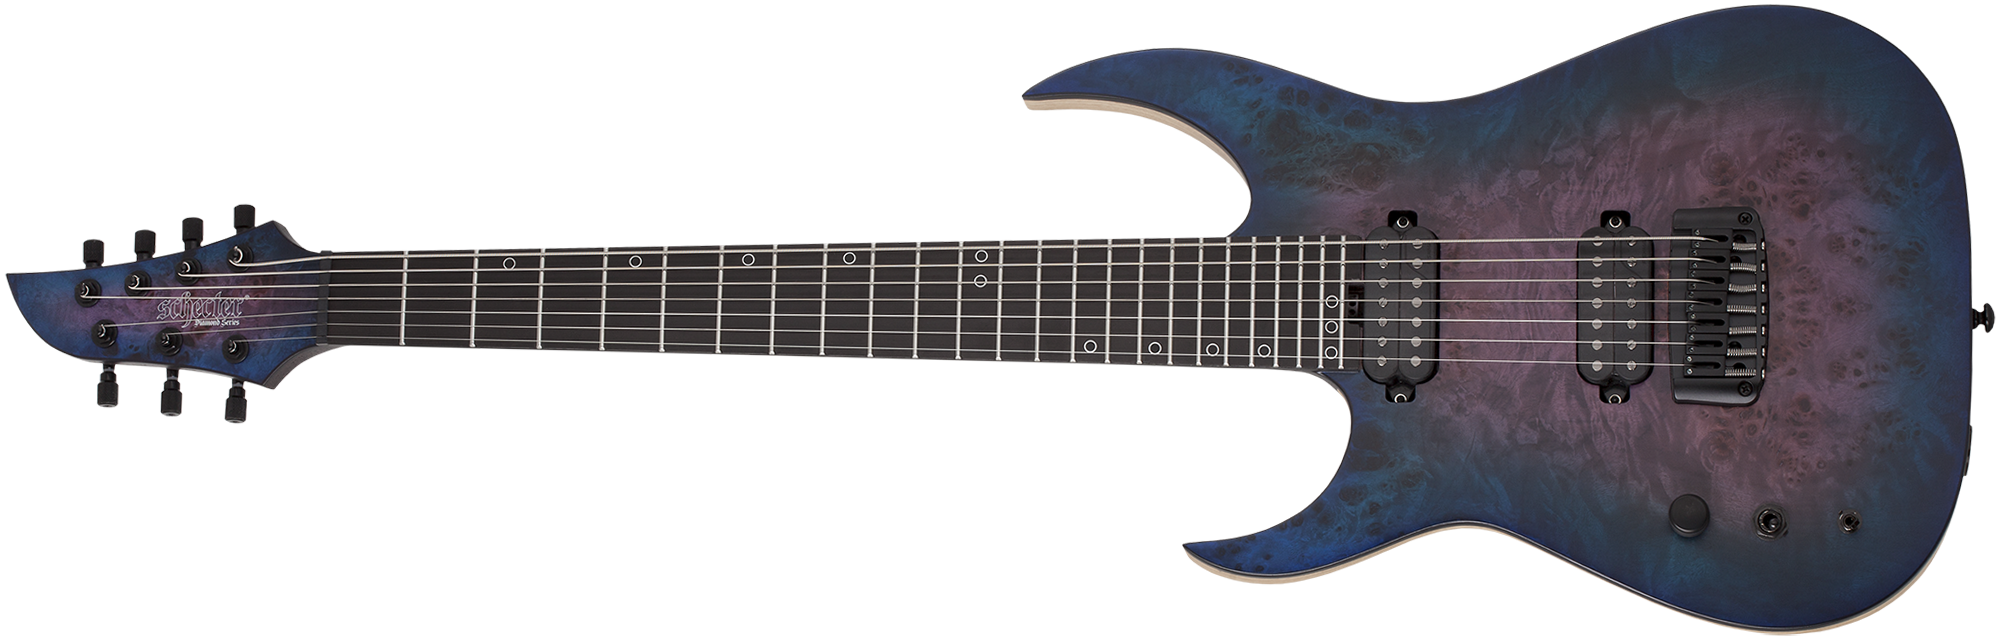 Schecter Keith Merrow KM-7 MK-III Left Handed Electric Guitar Blue Crimson 305-SHC